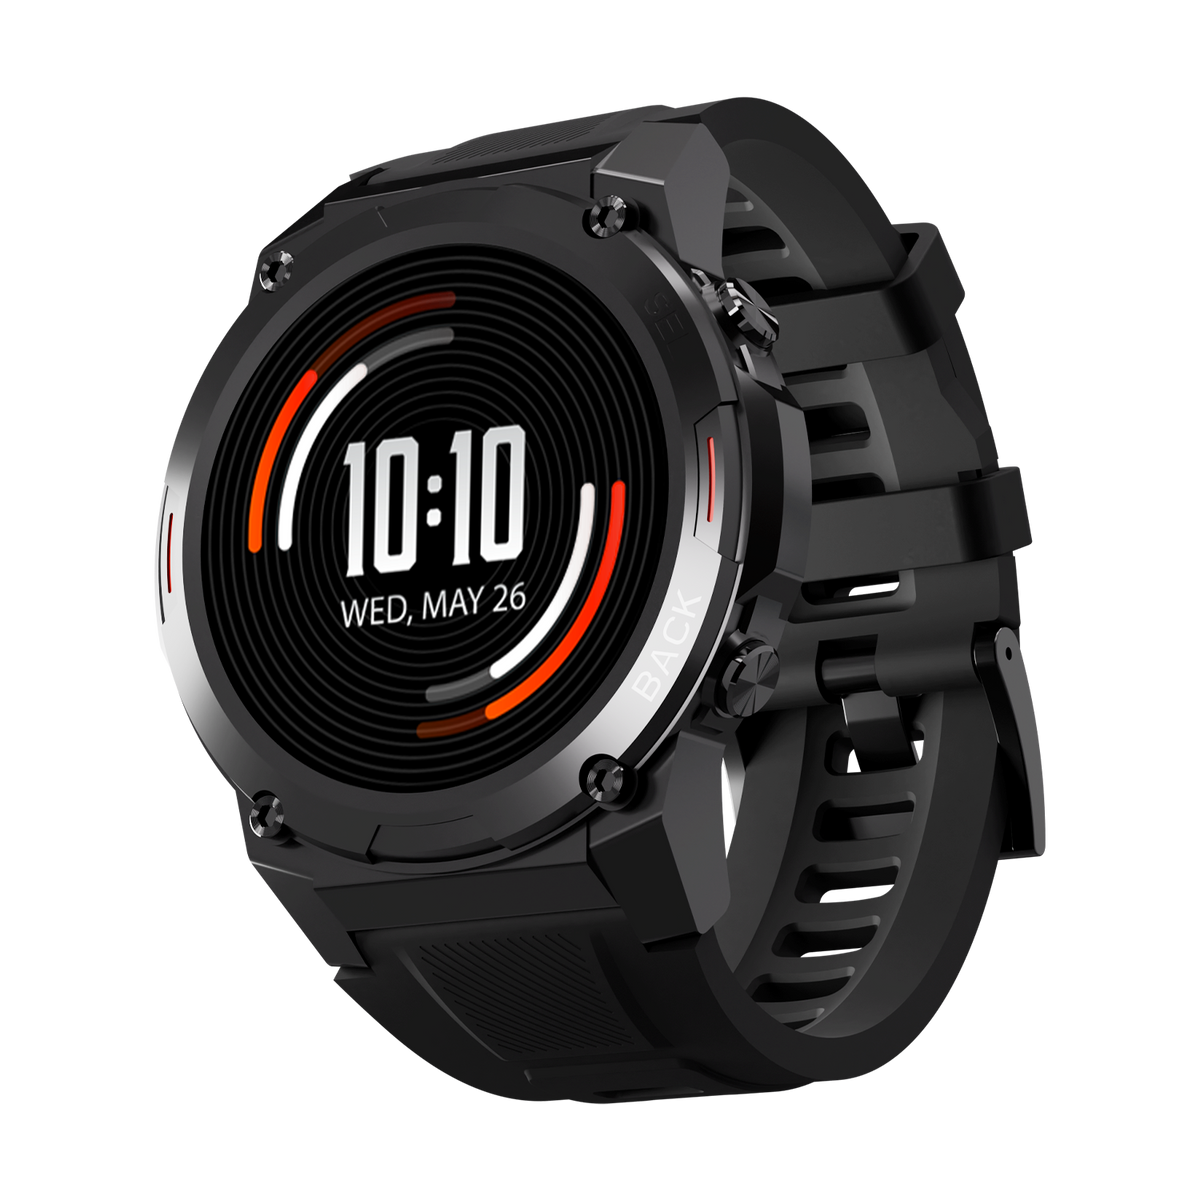 r-011 smart watch metallic dial